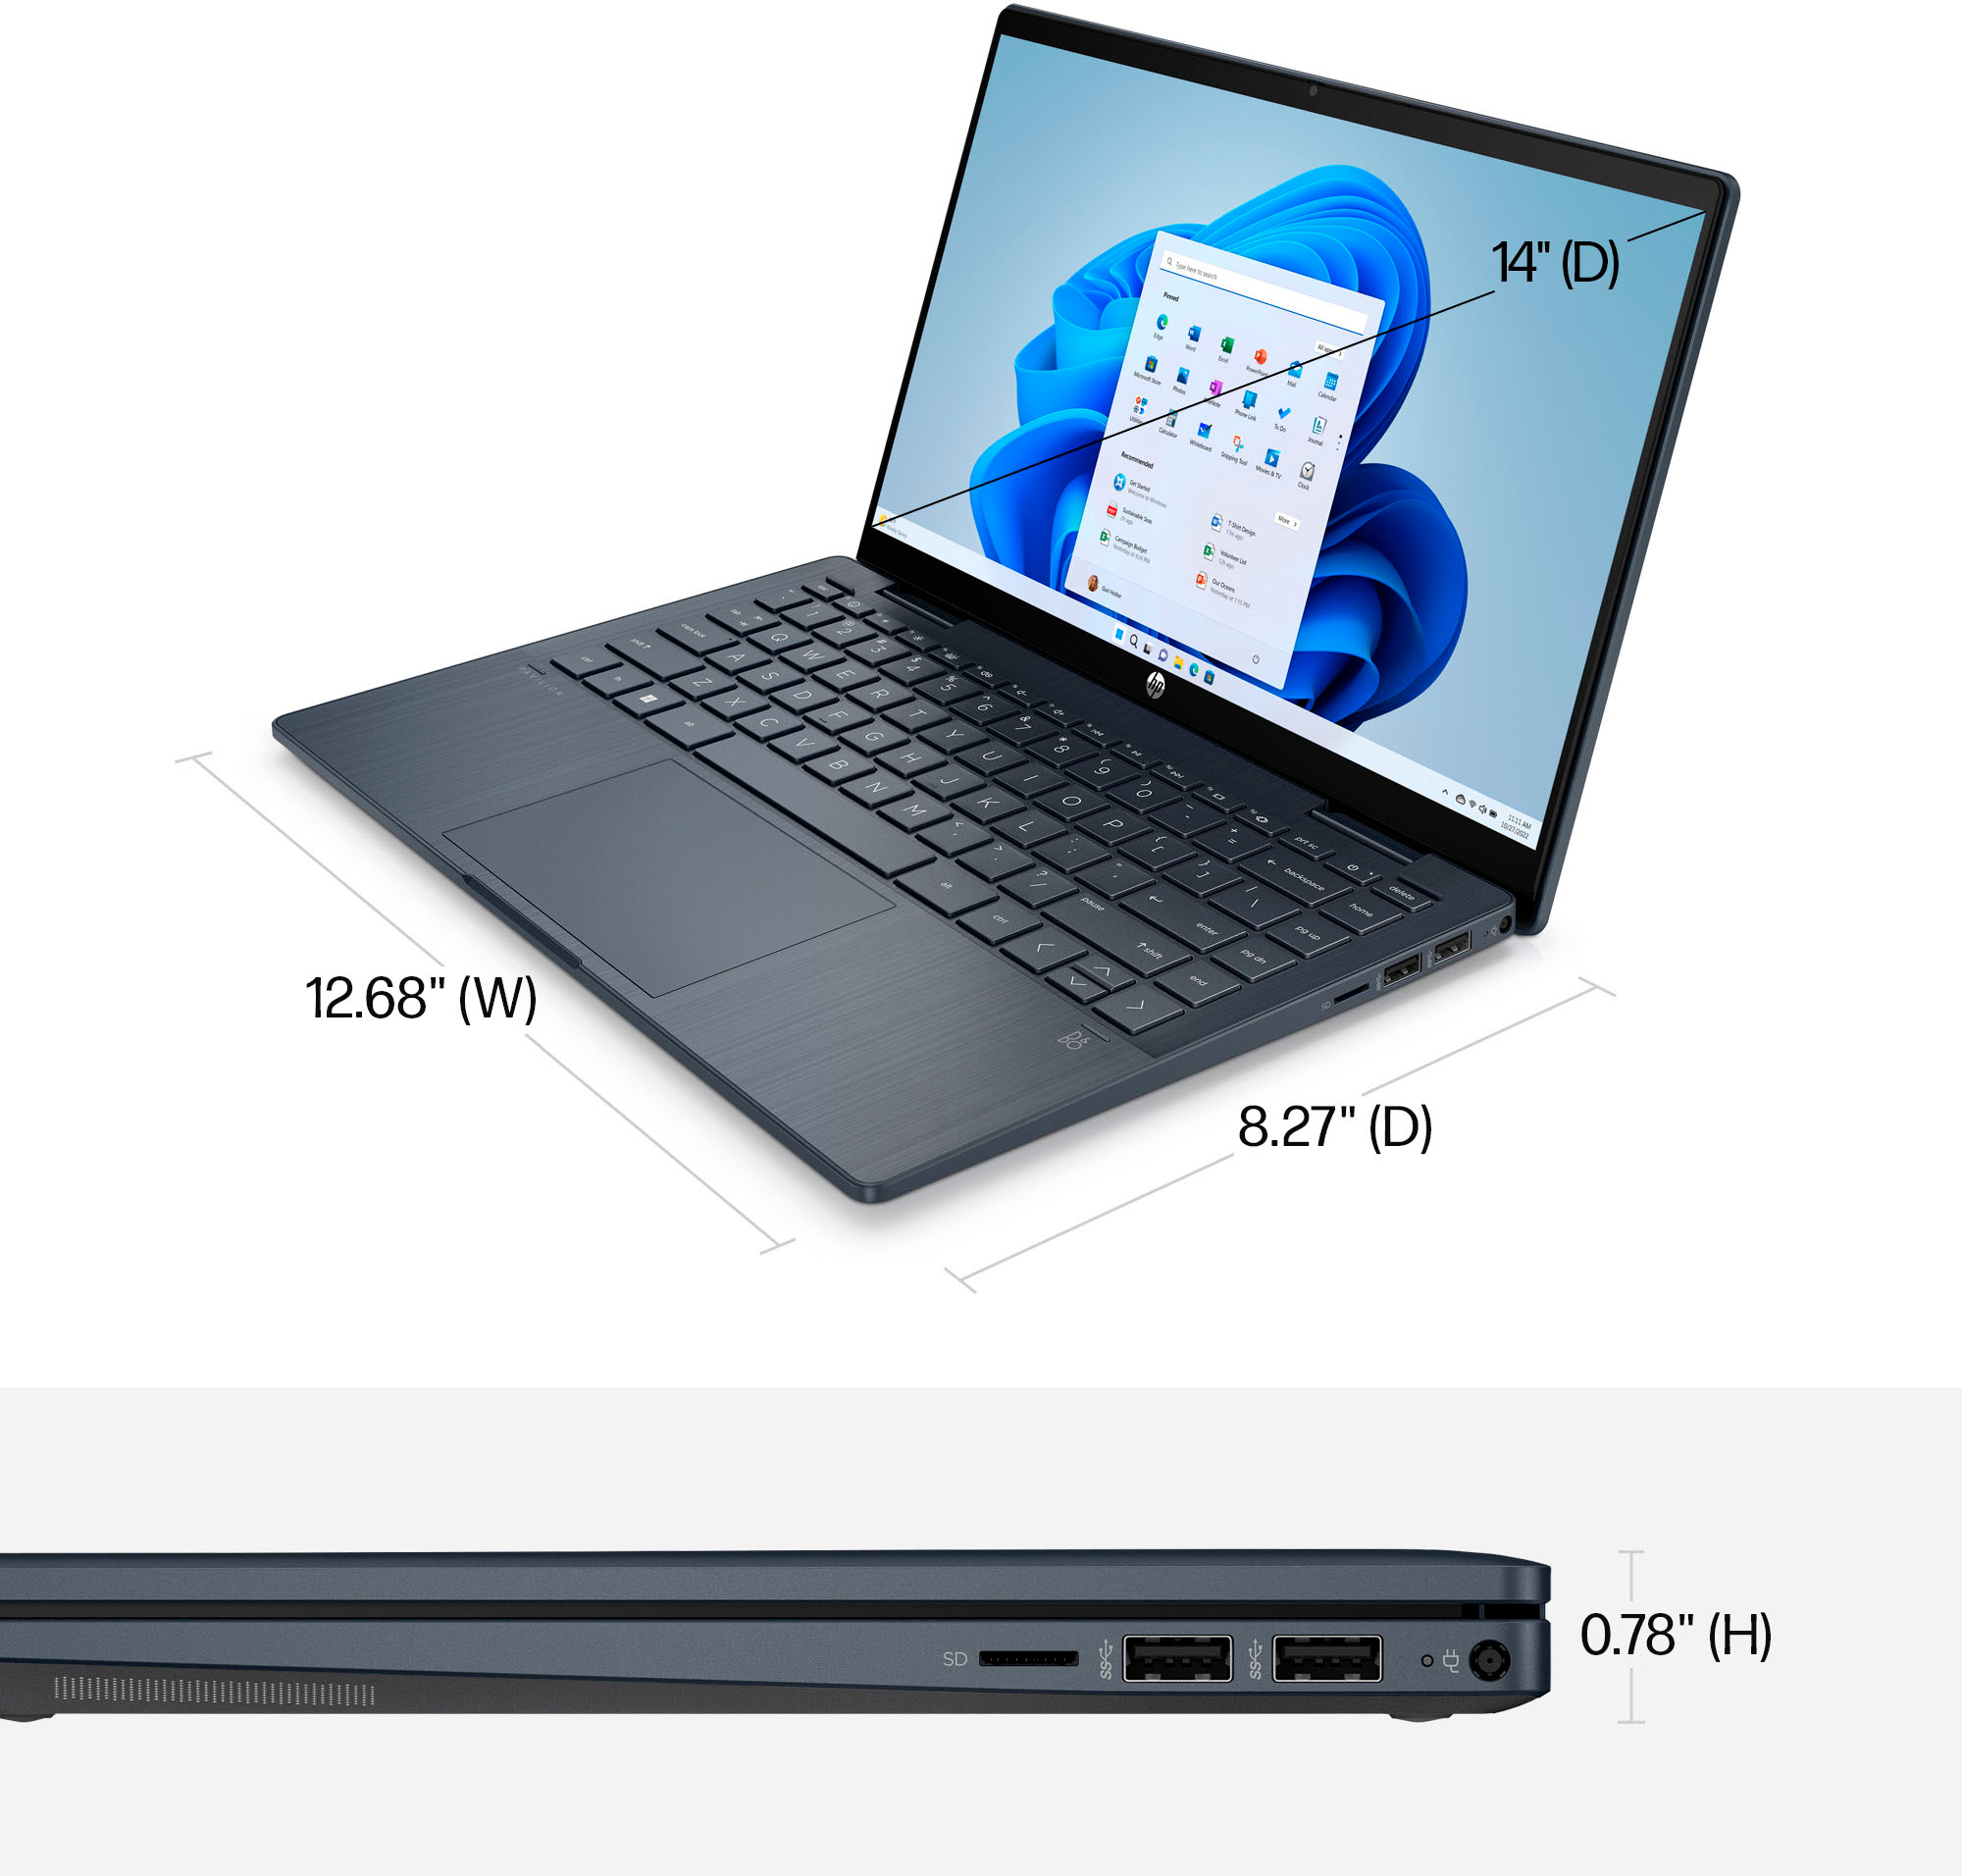 HP Pavilion Gaming Laptop 15 (2021) Review 